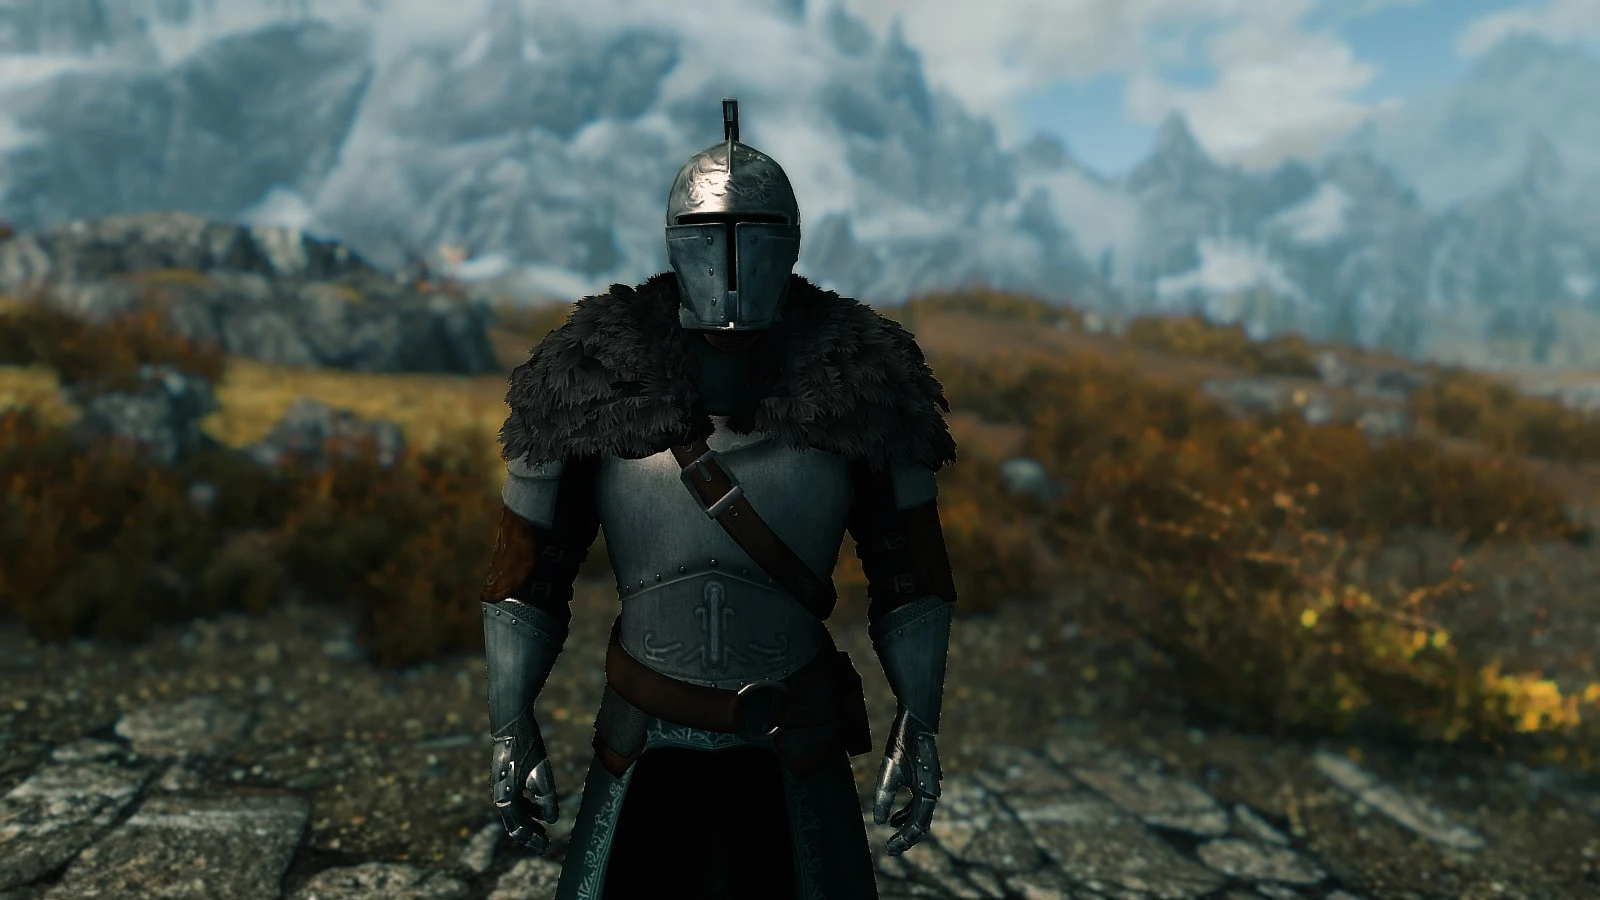 skyrim immersive armors mod missing textures